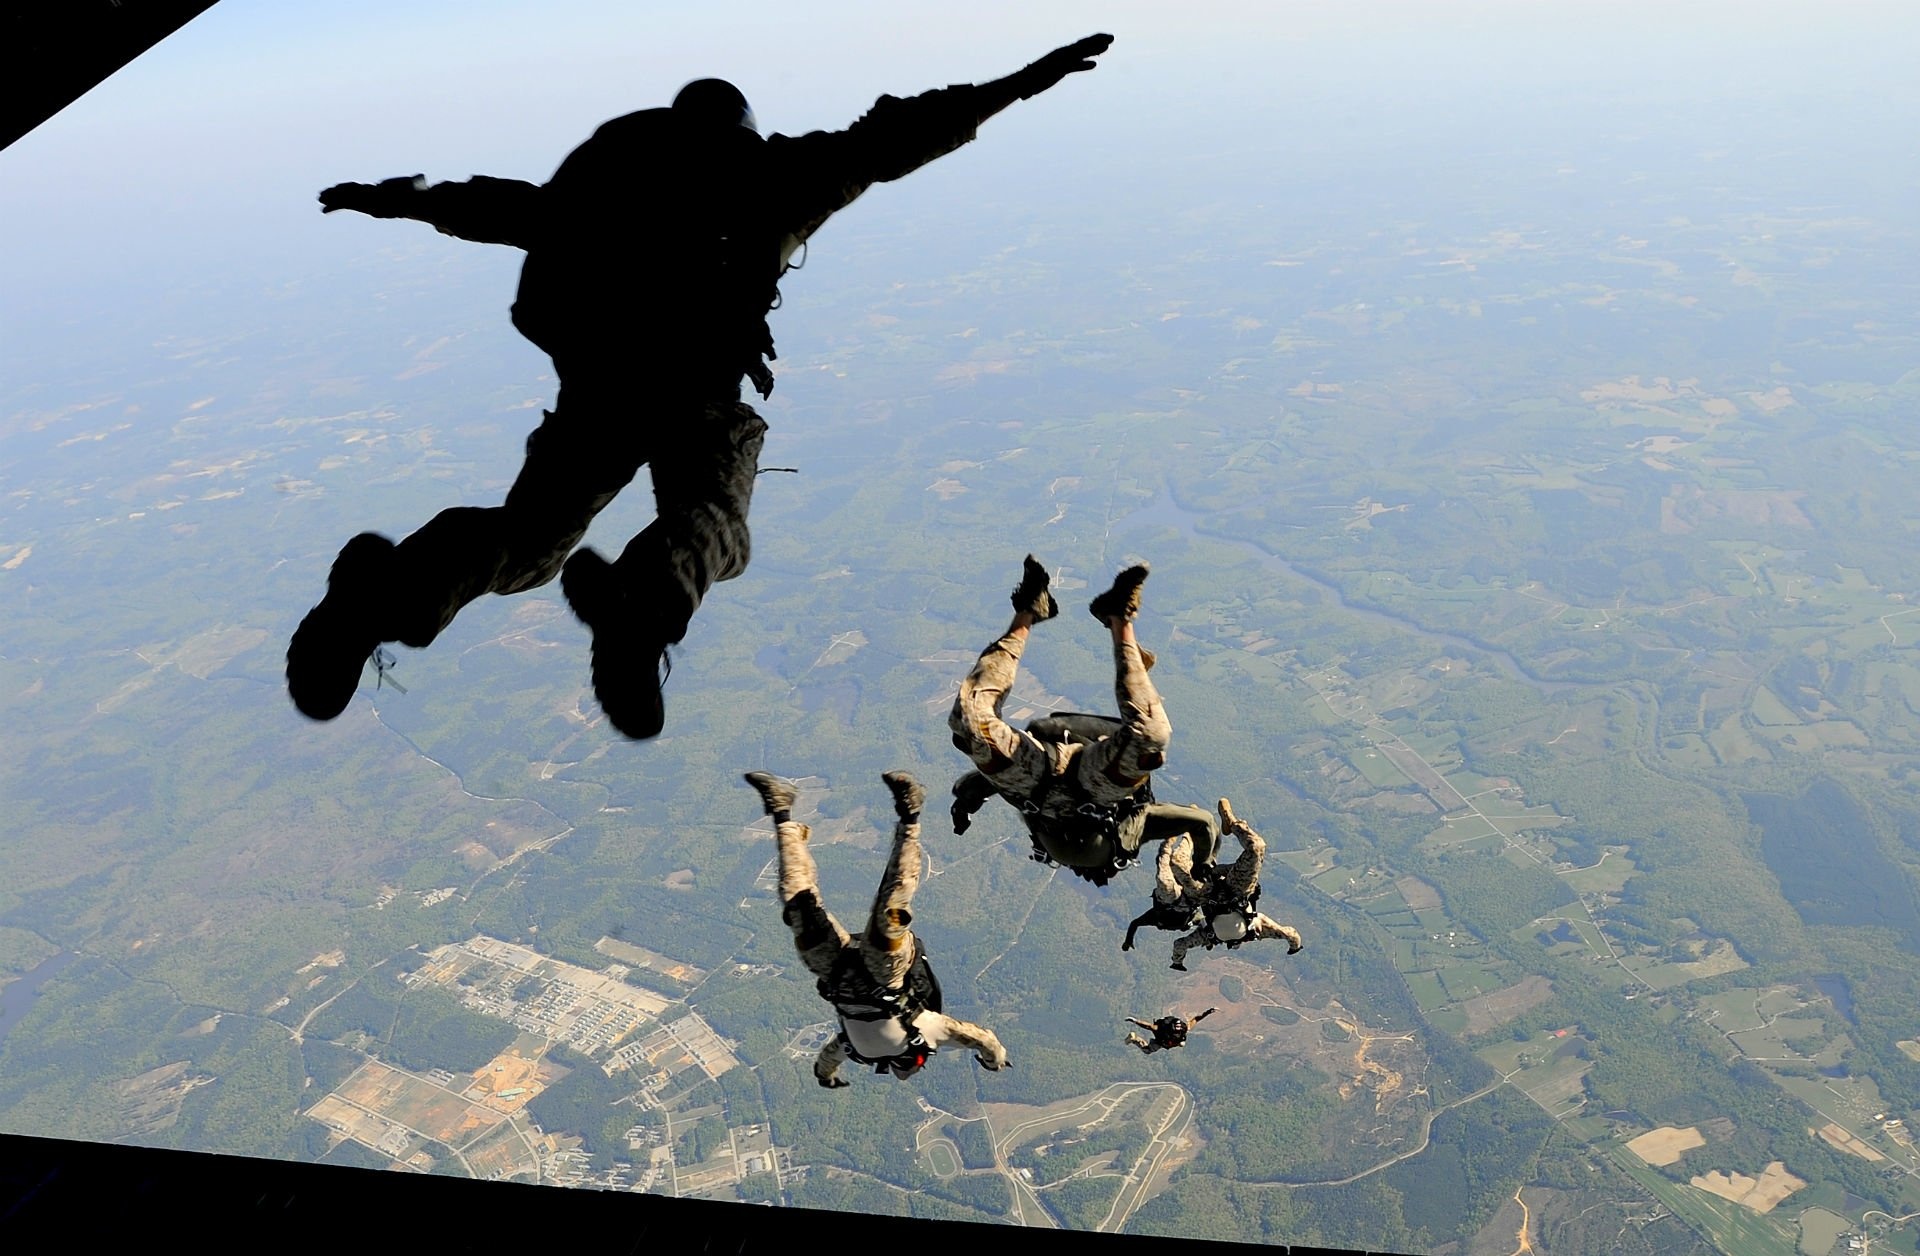 Parachuting: Airmen of the United States Air Force conduct a free-fall parachute jump. 1920x1260 HD Wallpaper.